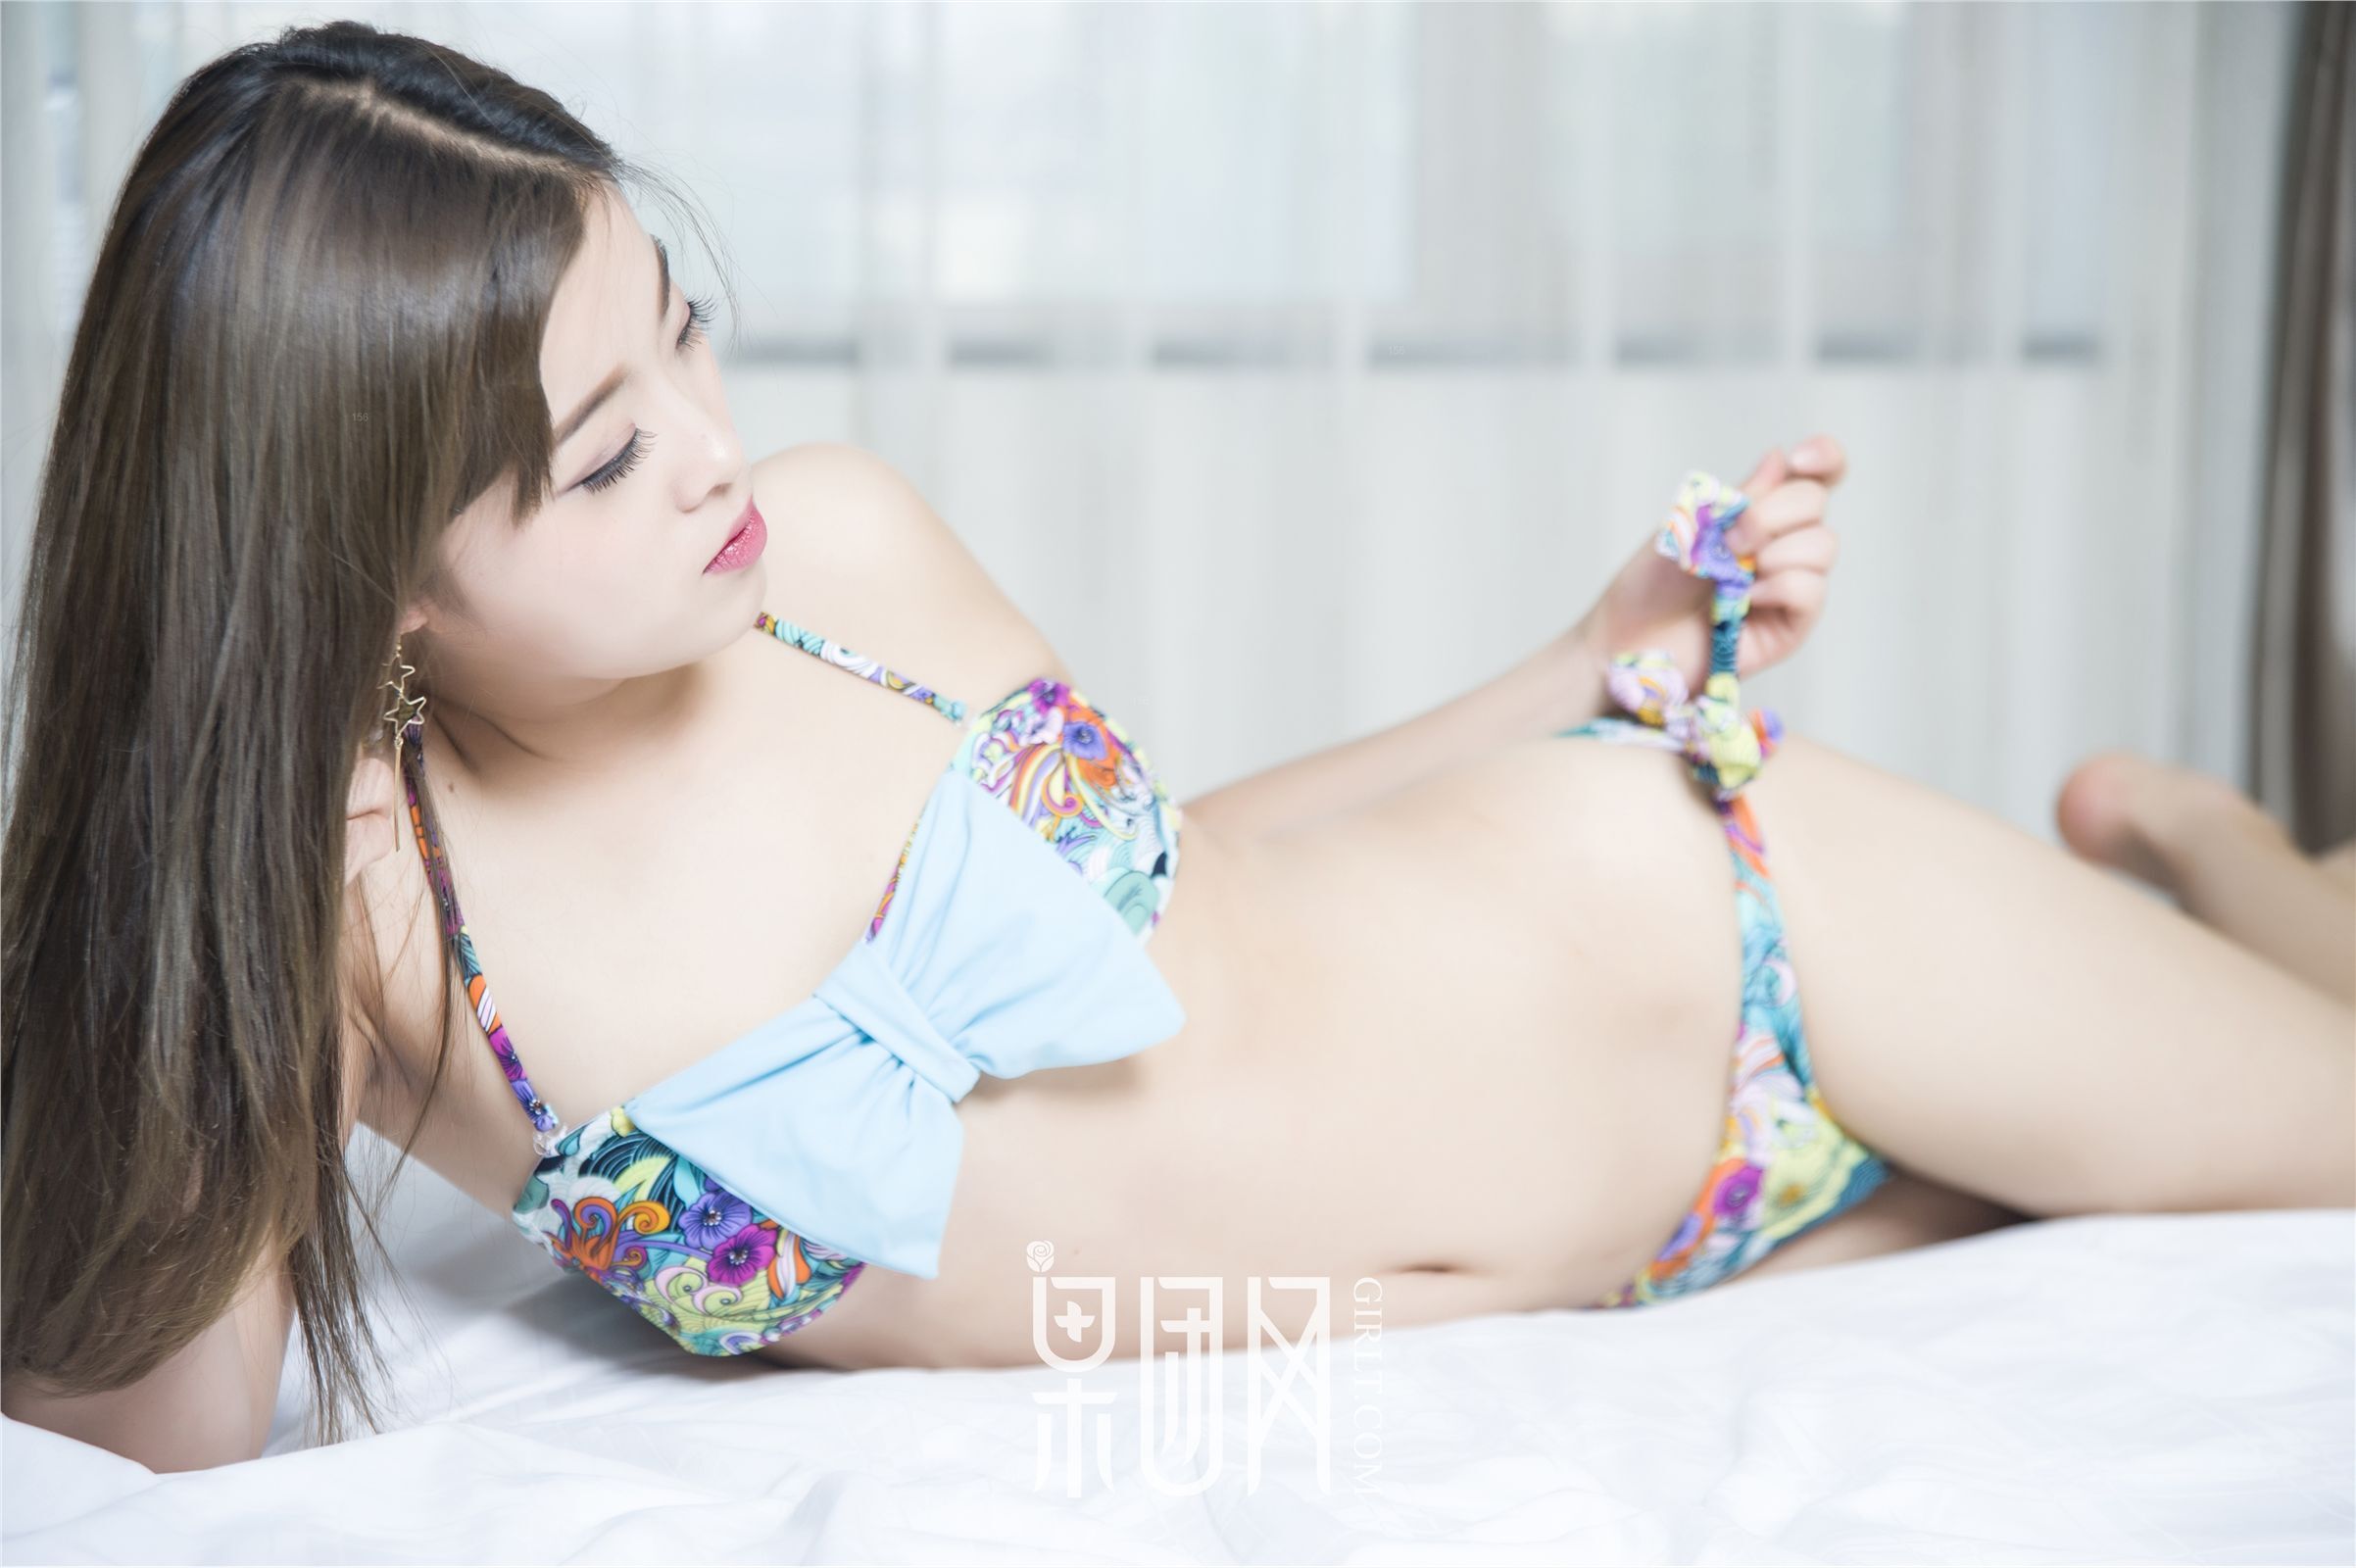 [girl] Guotuan June 29, 2017